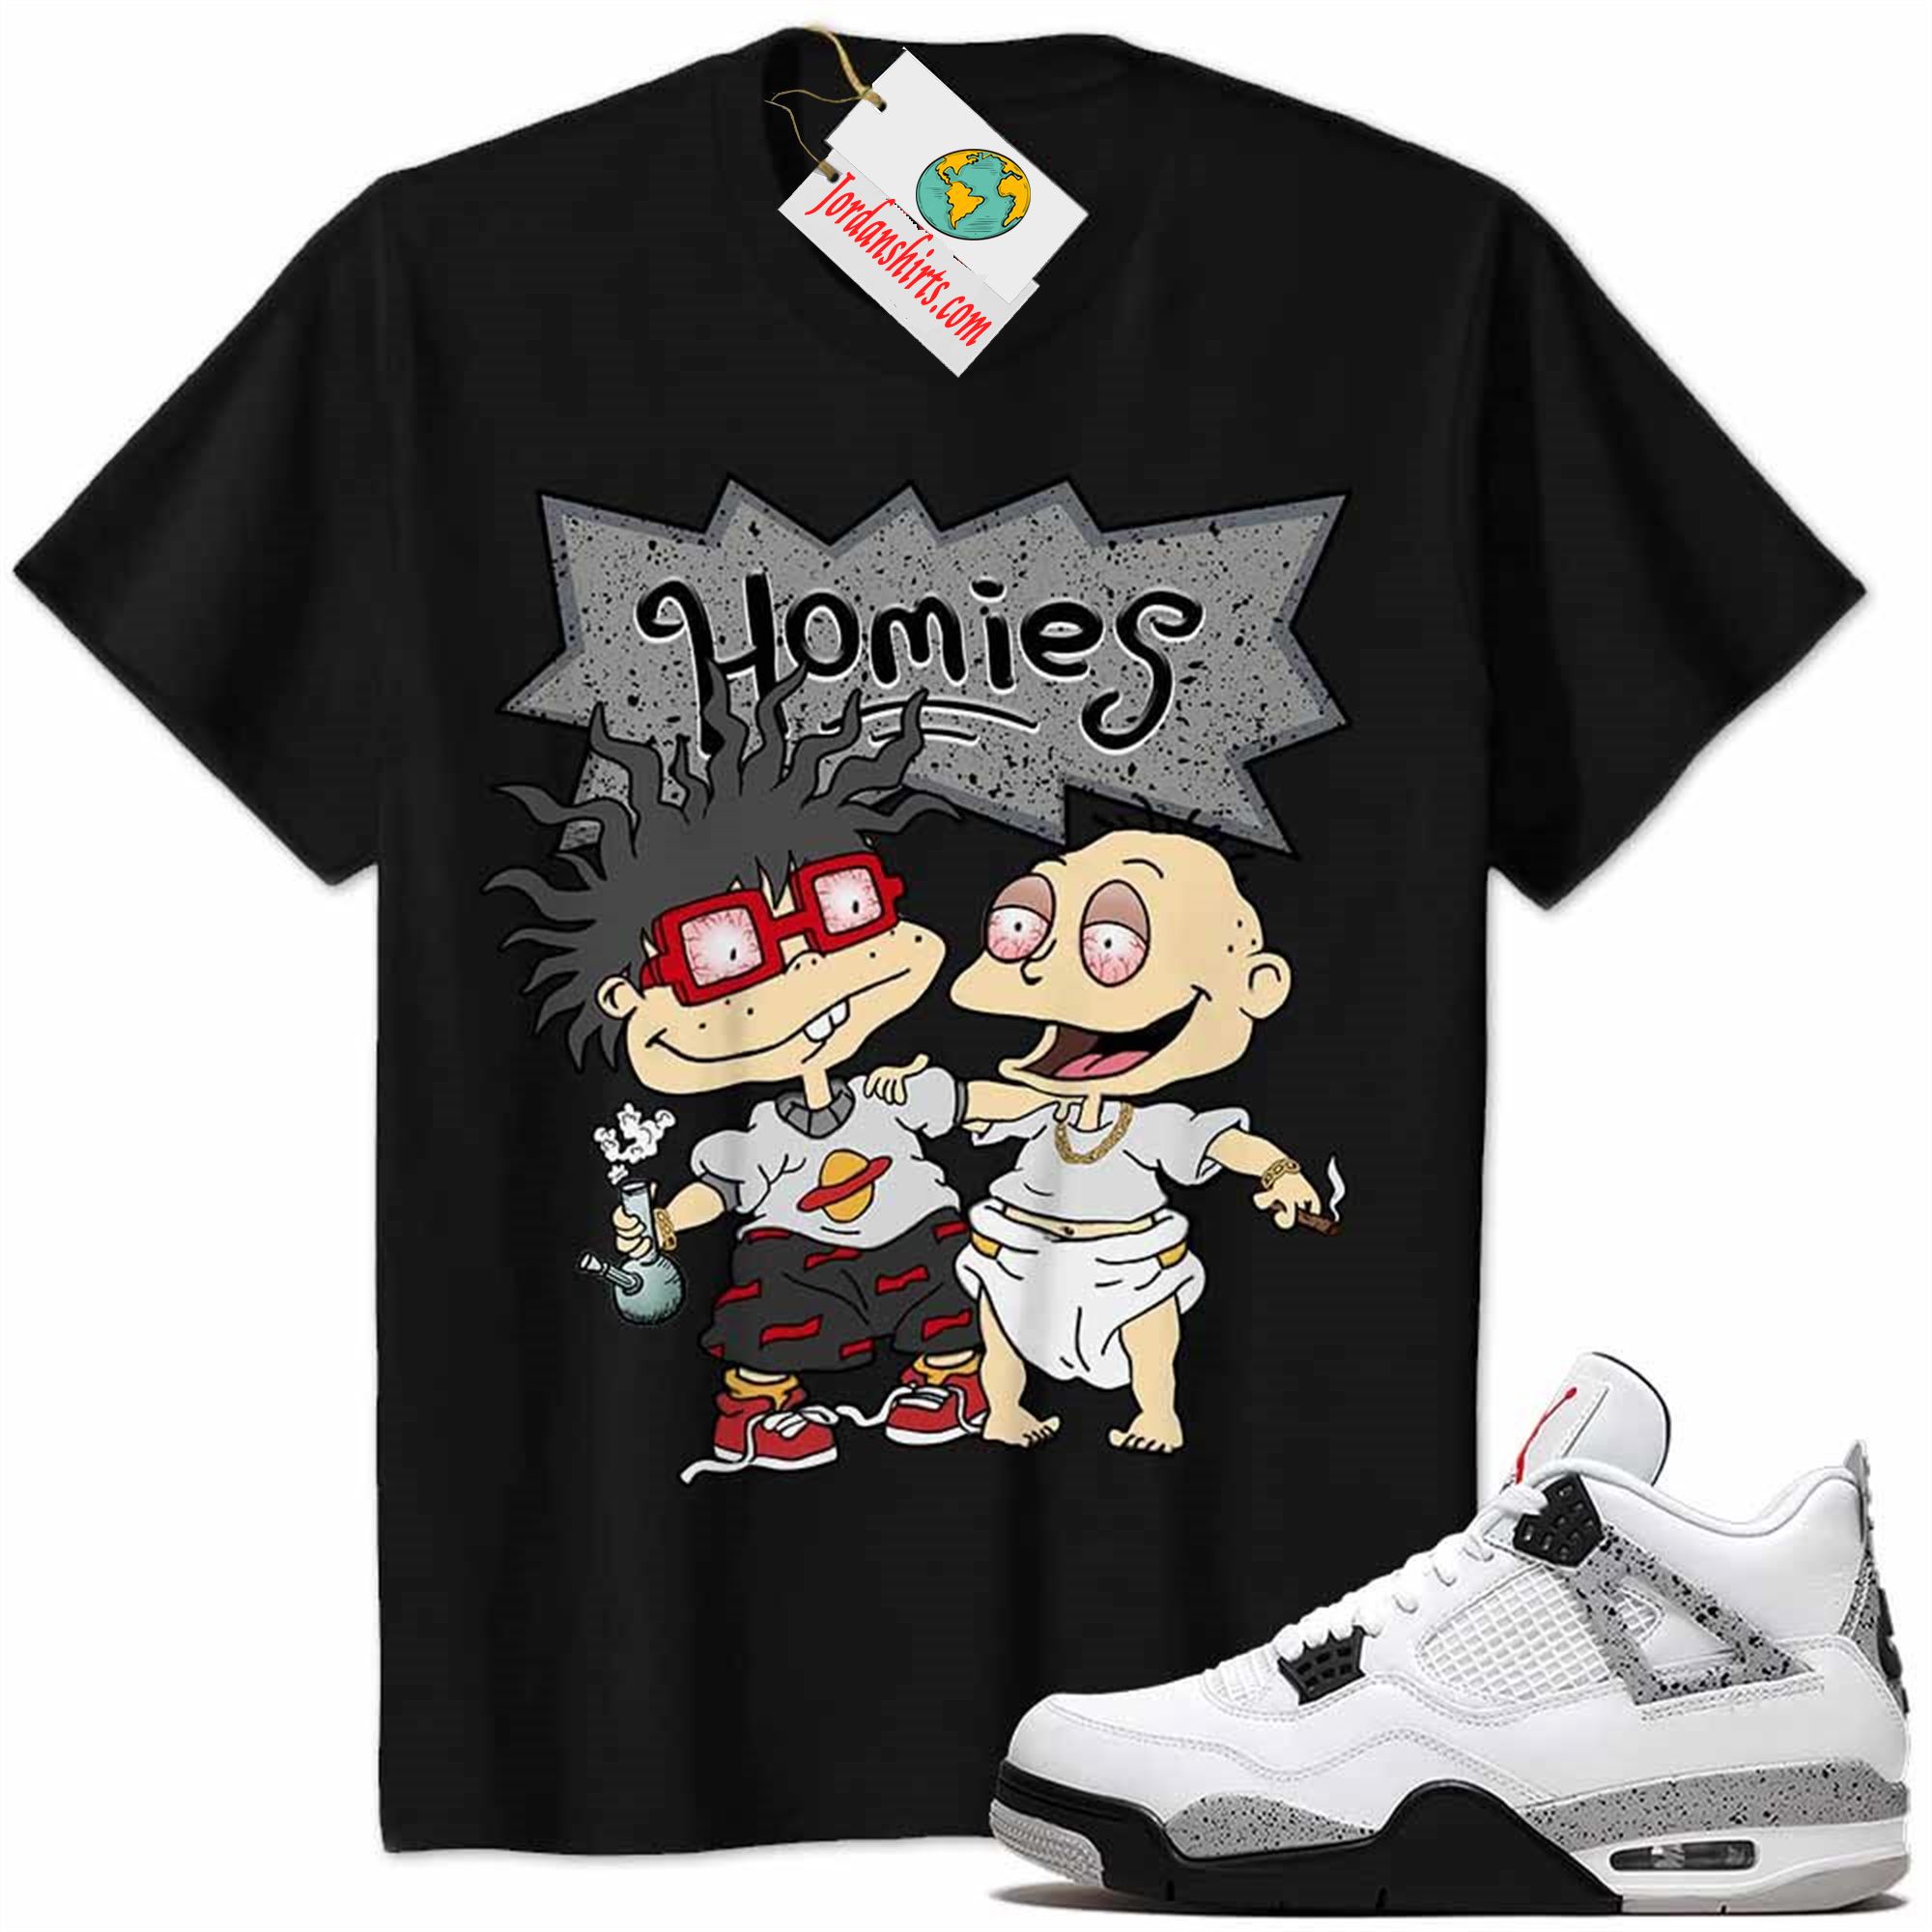 Jordan 4 Shirt, Jordan 4 Cement Shirt Hommies Tommy Pickles Chuckie Finster Rugrats Black Full Size Up To 5xl